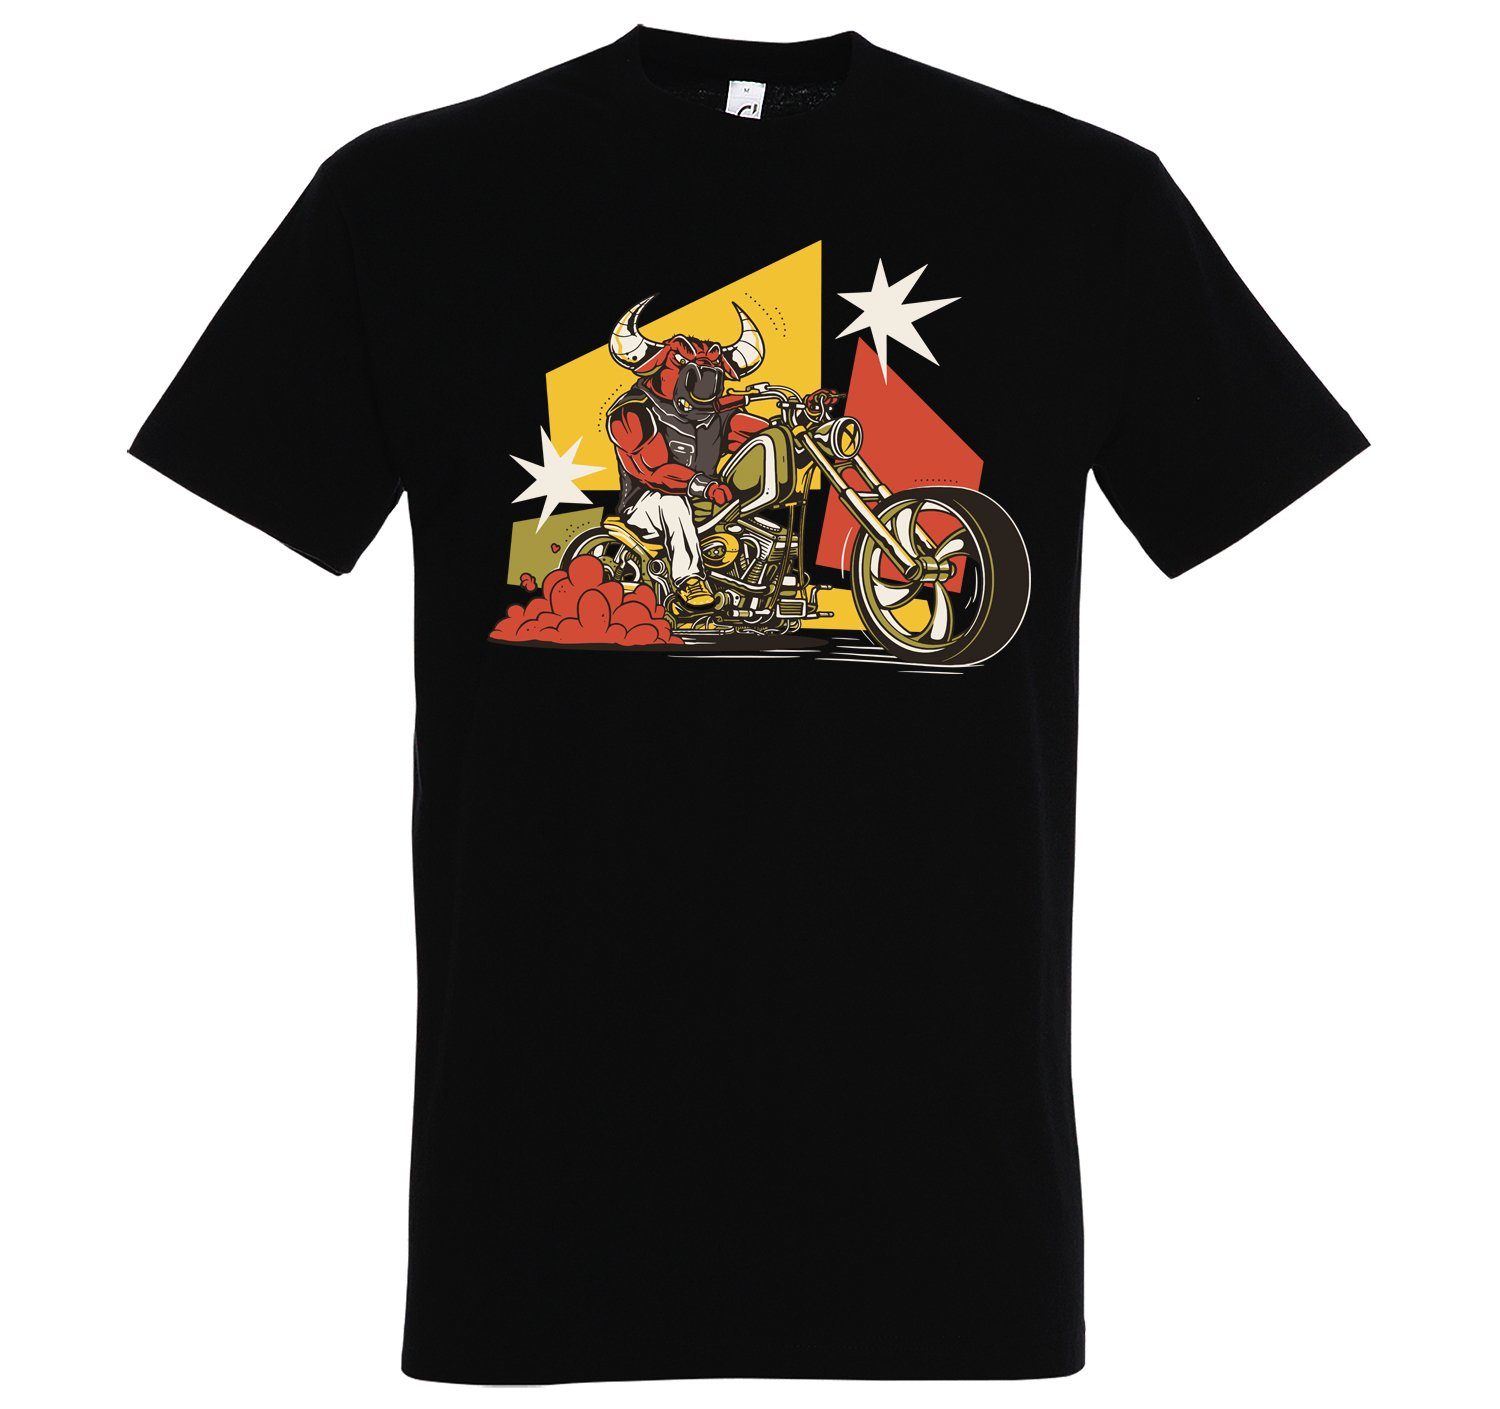 mit T-Shirt Designz Youth Herren Bull Frontprint Biker Schwarz trendigem T-Shirt